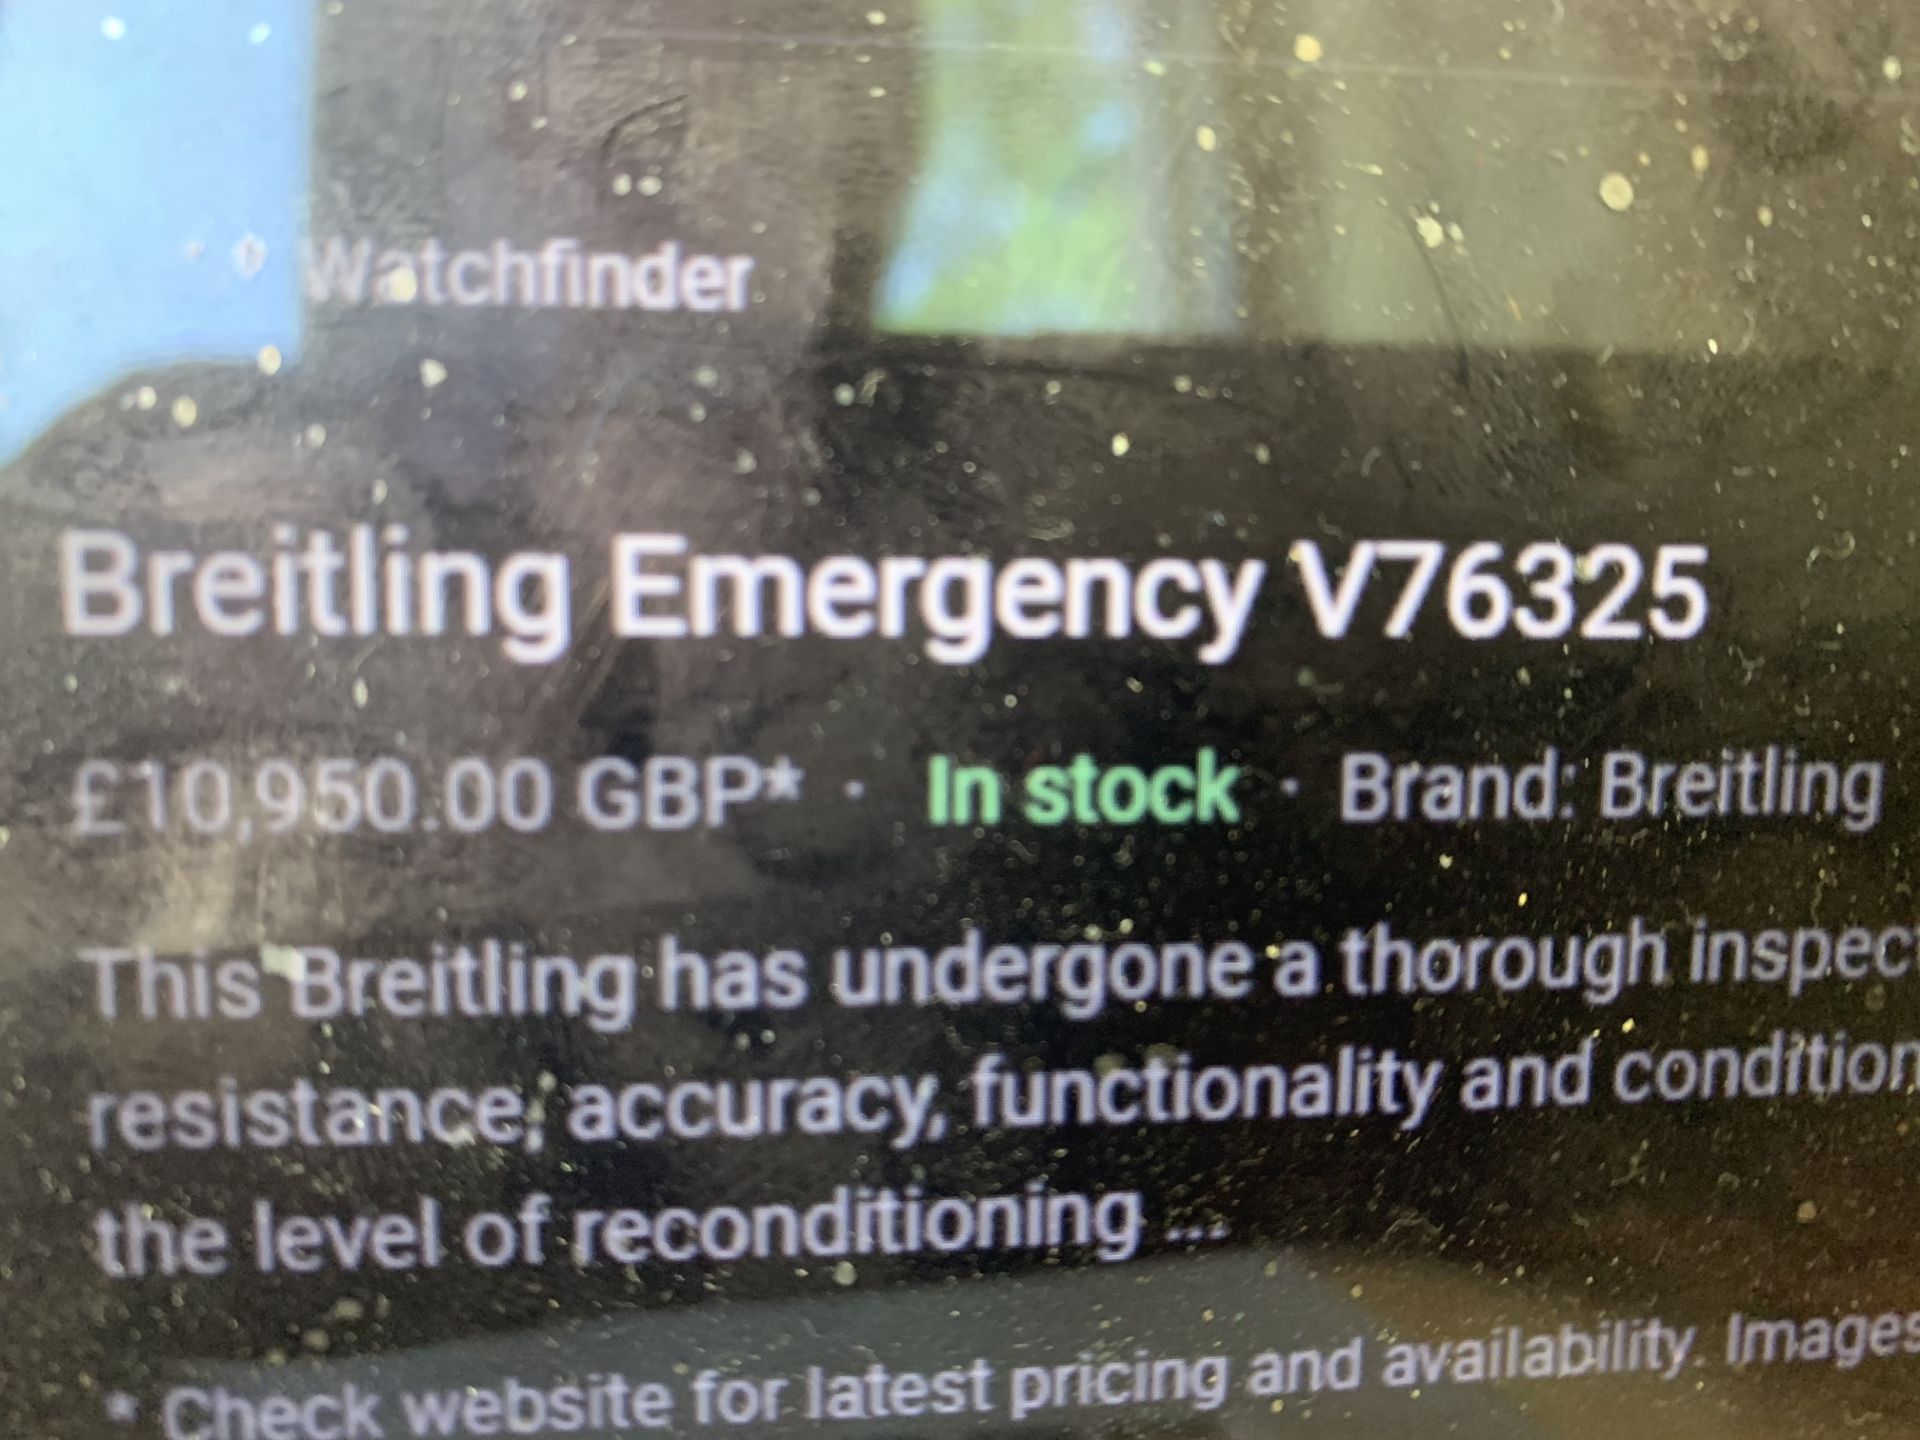 Breitling Emergency V76325 51mm Watch - Image 18 of 18